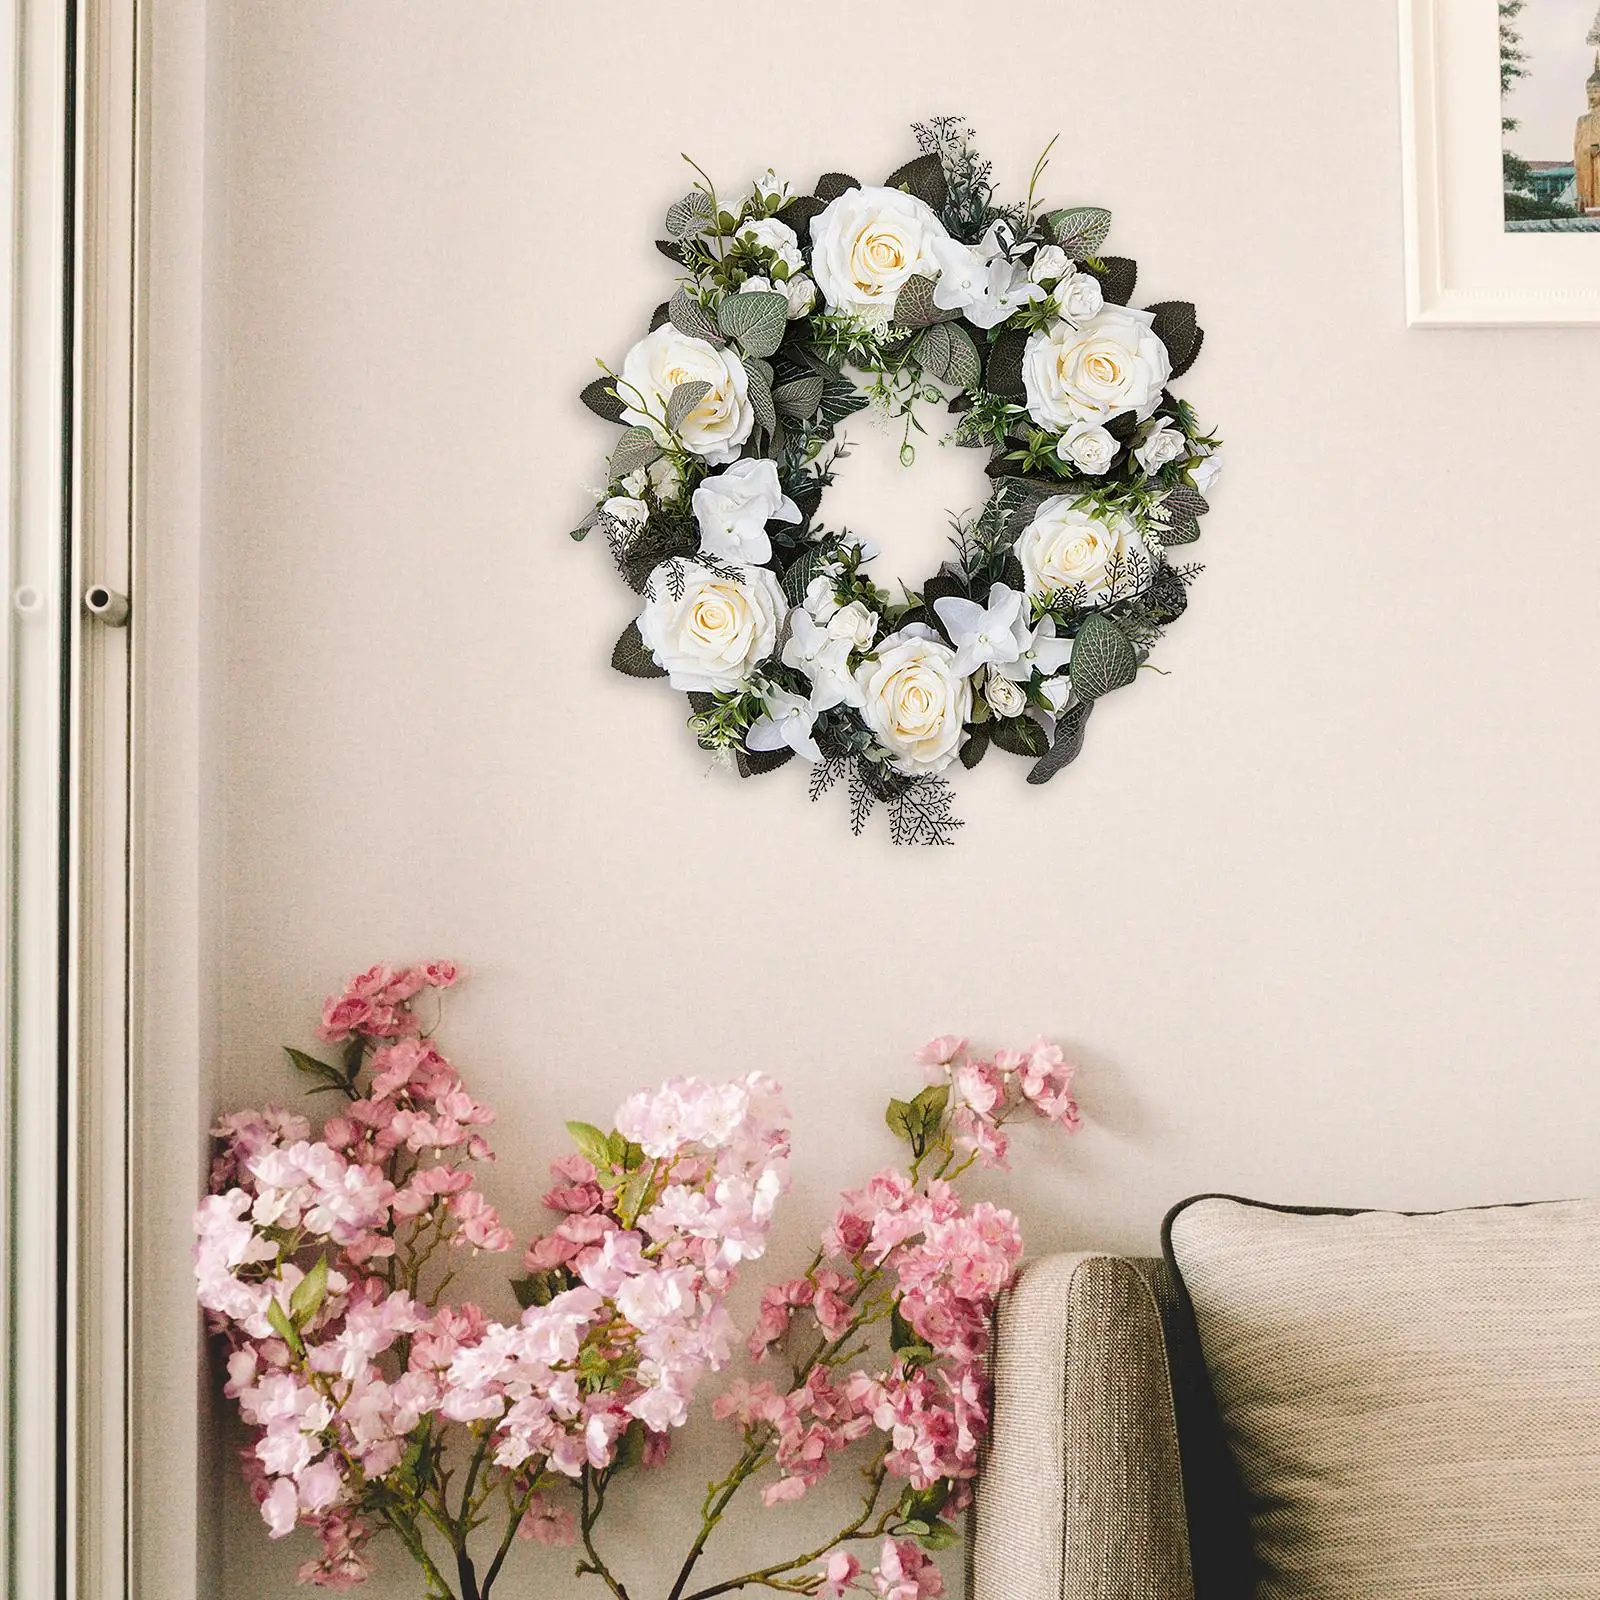 Artificial Wreath Flower Wreath Arrangements for Door Wall Wedding Decor Ornament